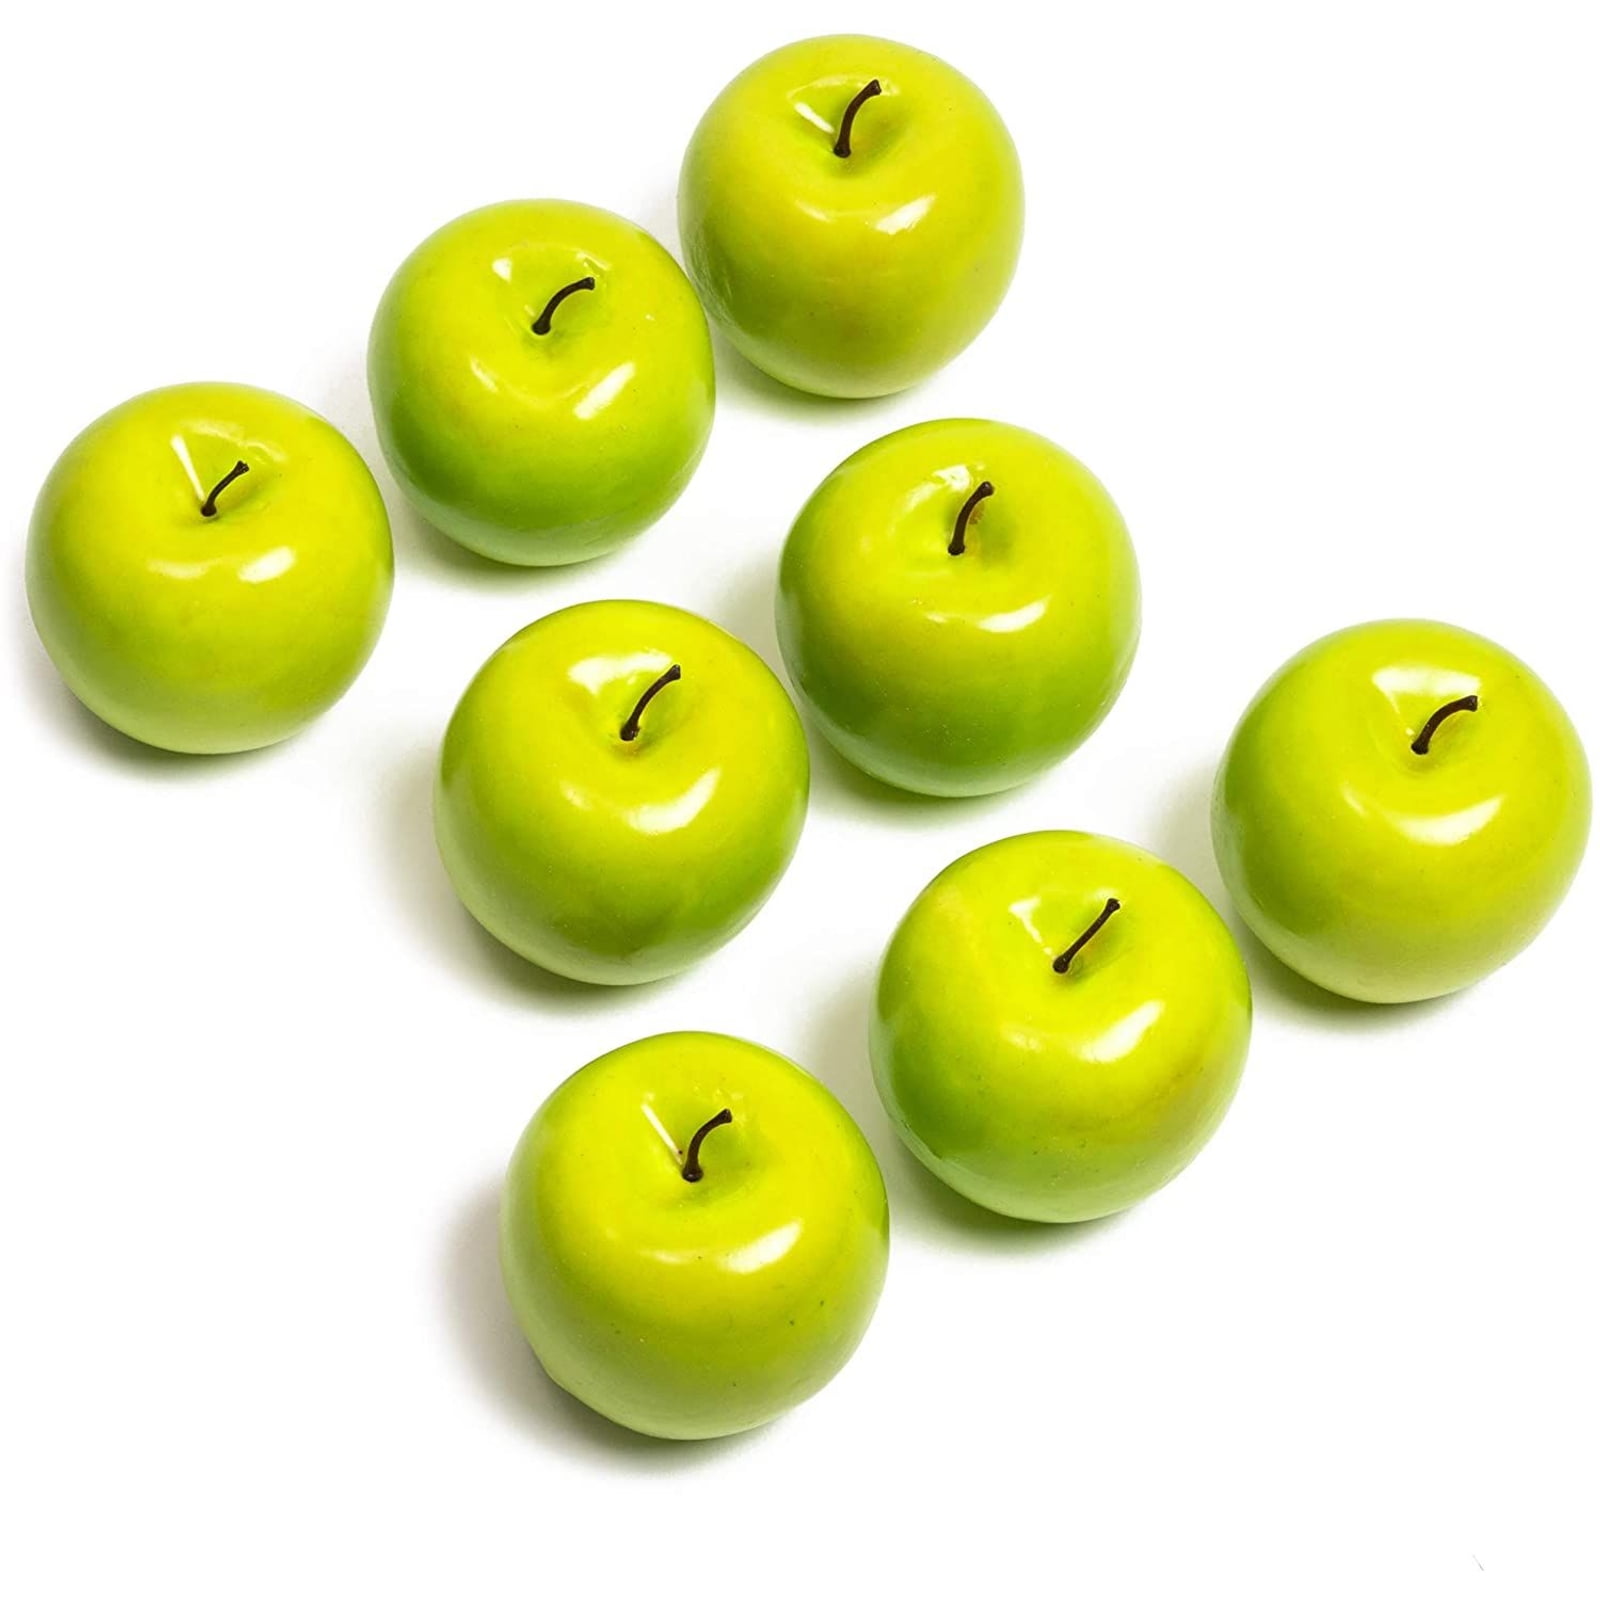 Props Artificial Apple Lifelike Orange Fake Peach Lemon Simulation Fruits 